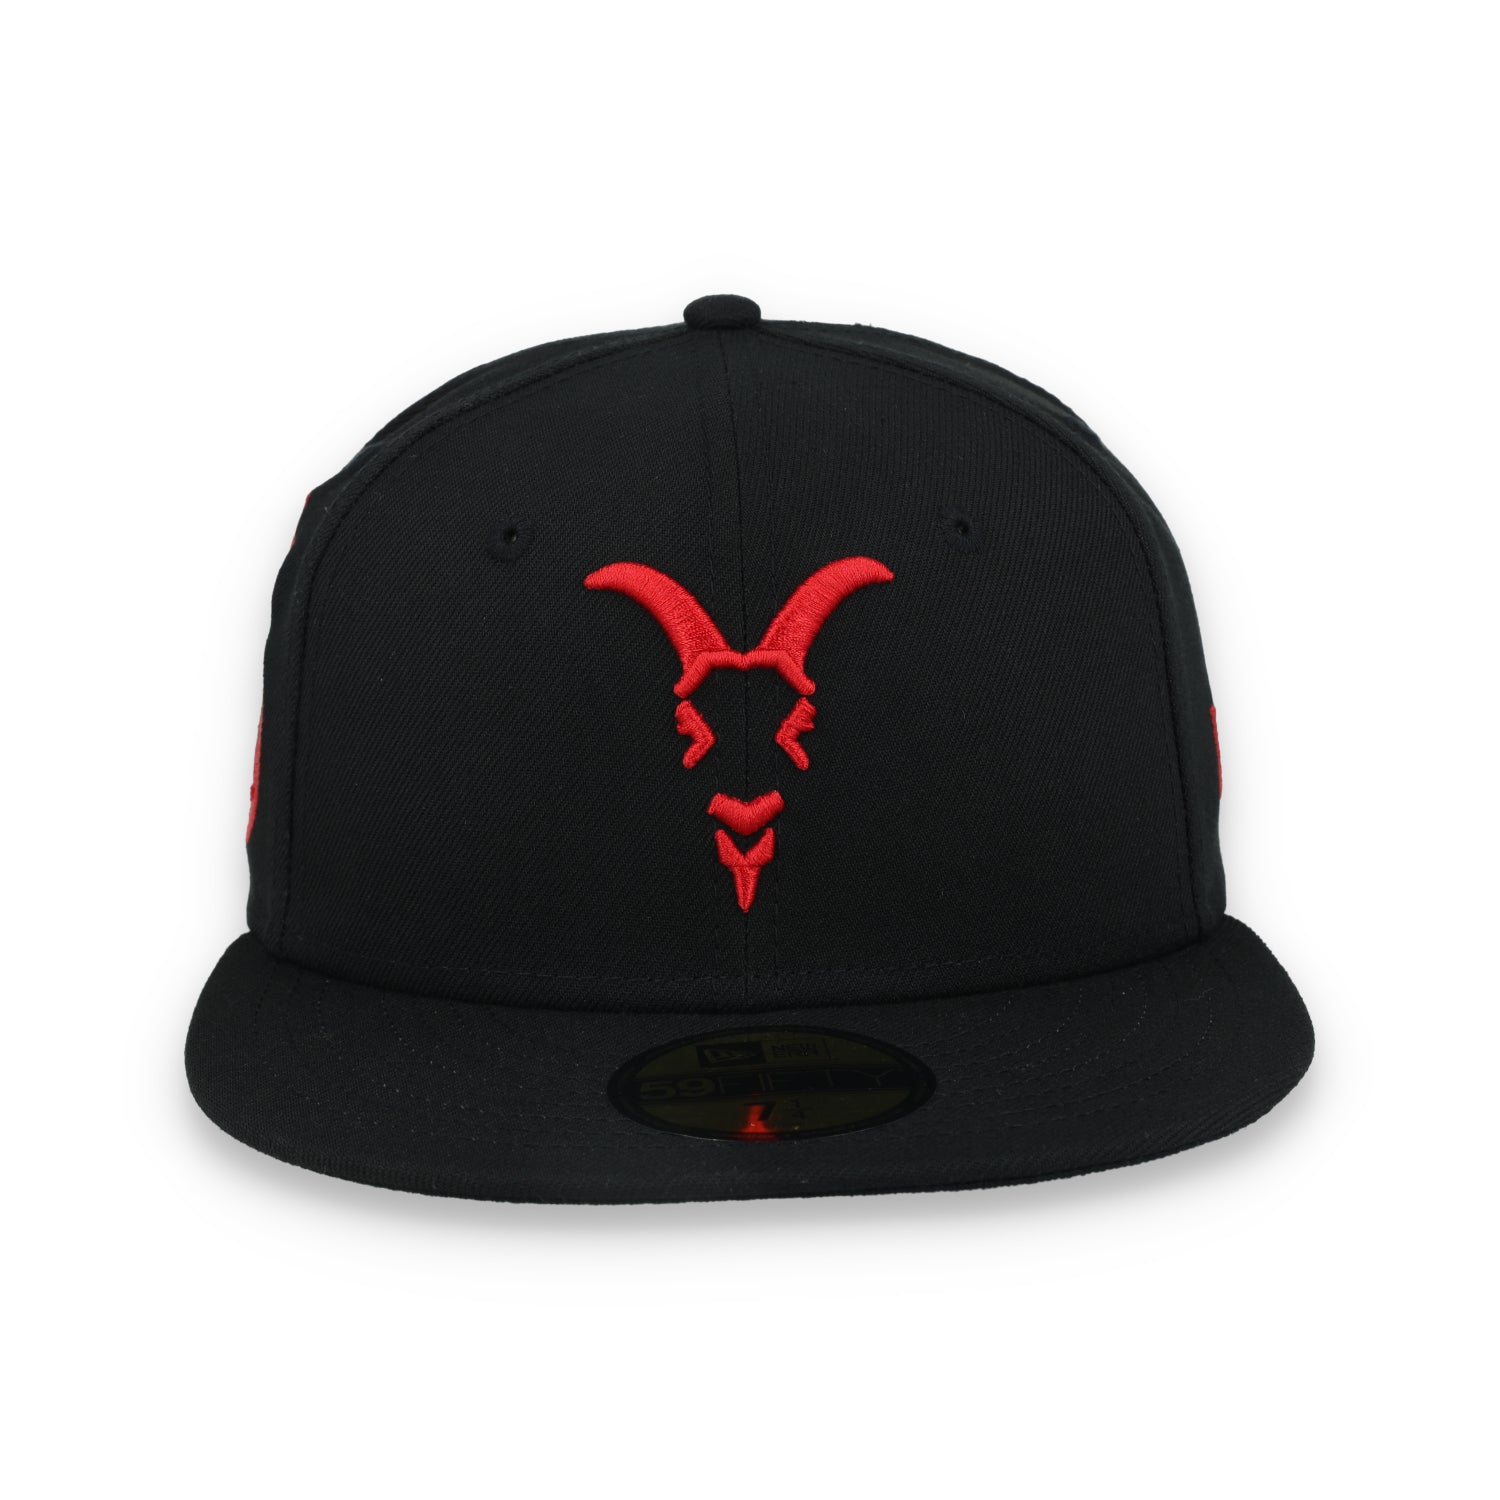 New Era Chivas de Guadalajara Goat Logo 59FIFTY Fitted Hat-Black/Red